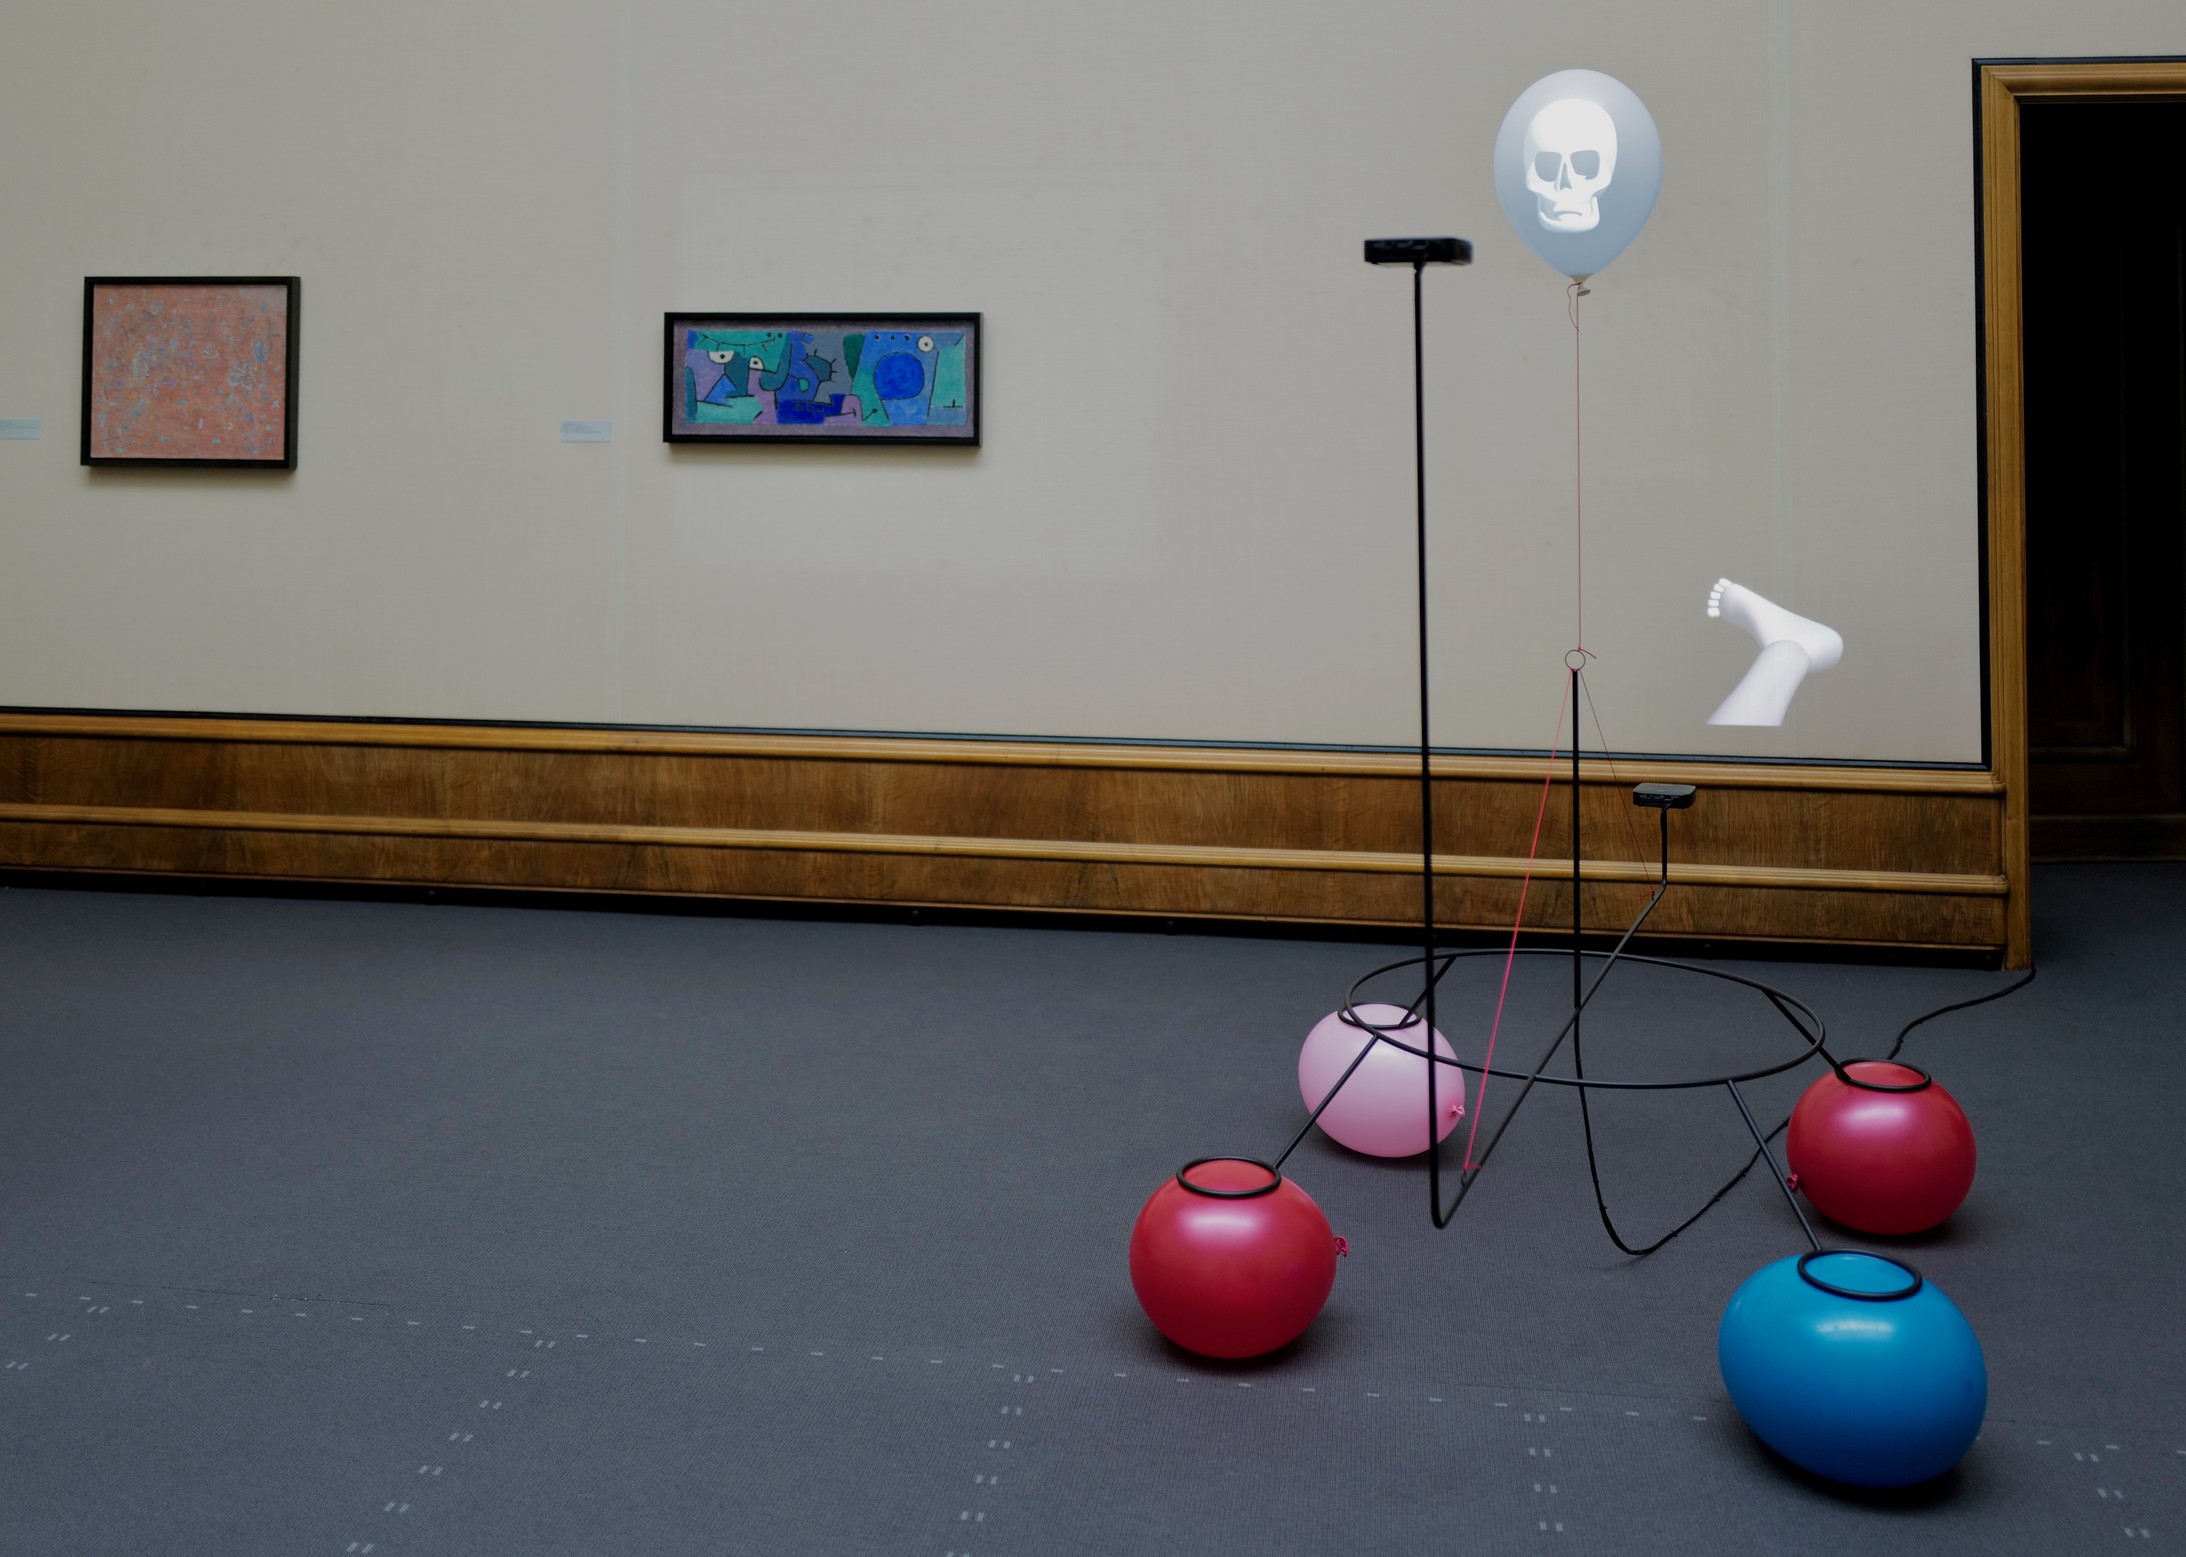 Yves Netzhammer: Objektarbeit, 2019, Stahlrohr, Ballone, Faden, 2 Projektionen (oben: 5.20 min / unten: 4.55 min, LOOP), 195 x 115 x 180 cm, Courtesy der Künstler; Foto: J21, Urs Meier